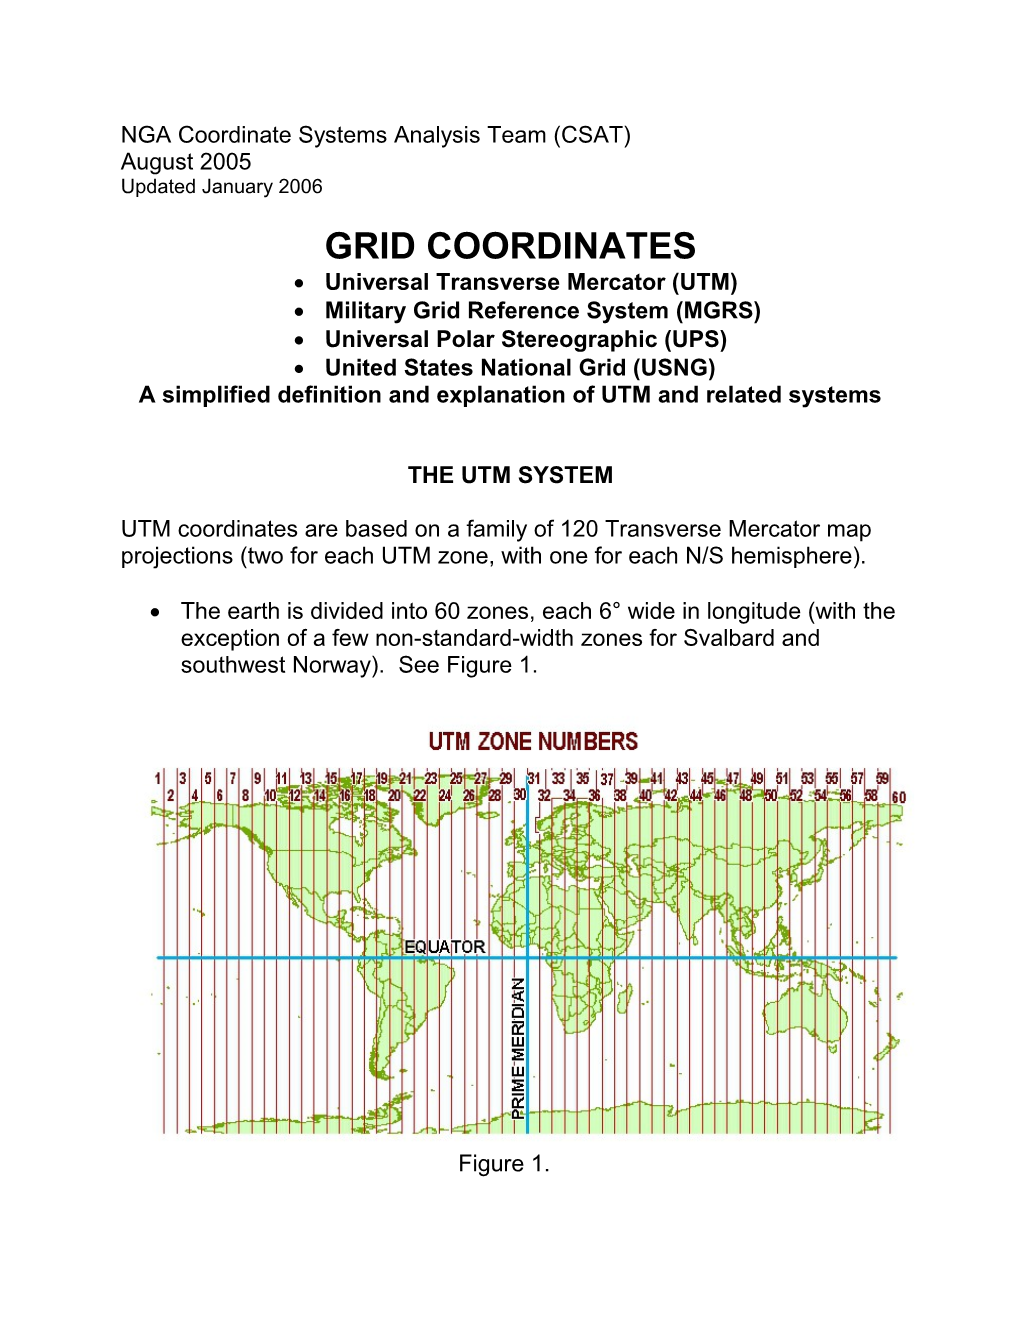 Universal Transverse Mercator (UTM) and Universal Polar Stereographic (UPS) Coordinates